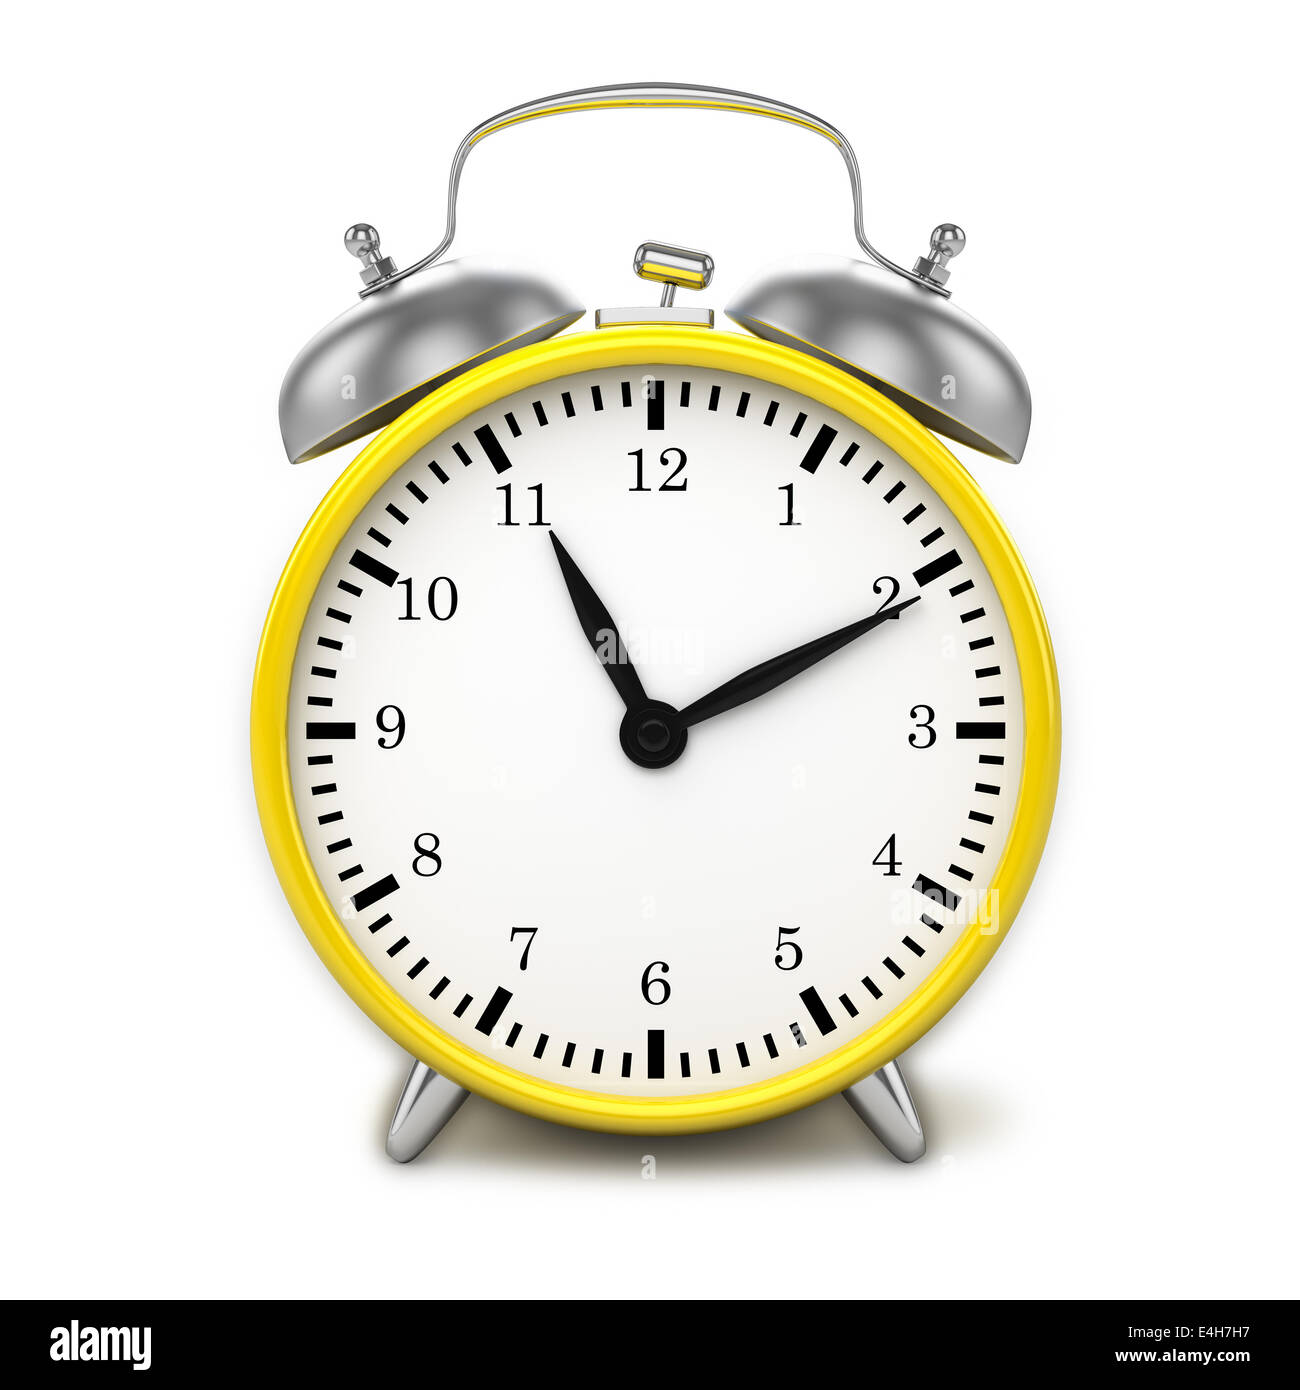 Yellow retro styled classic alarm clock isolated on white Stock Photo